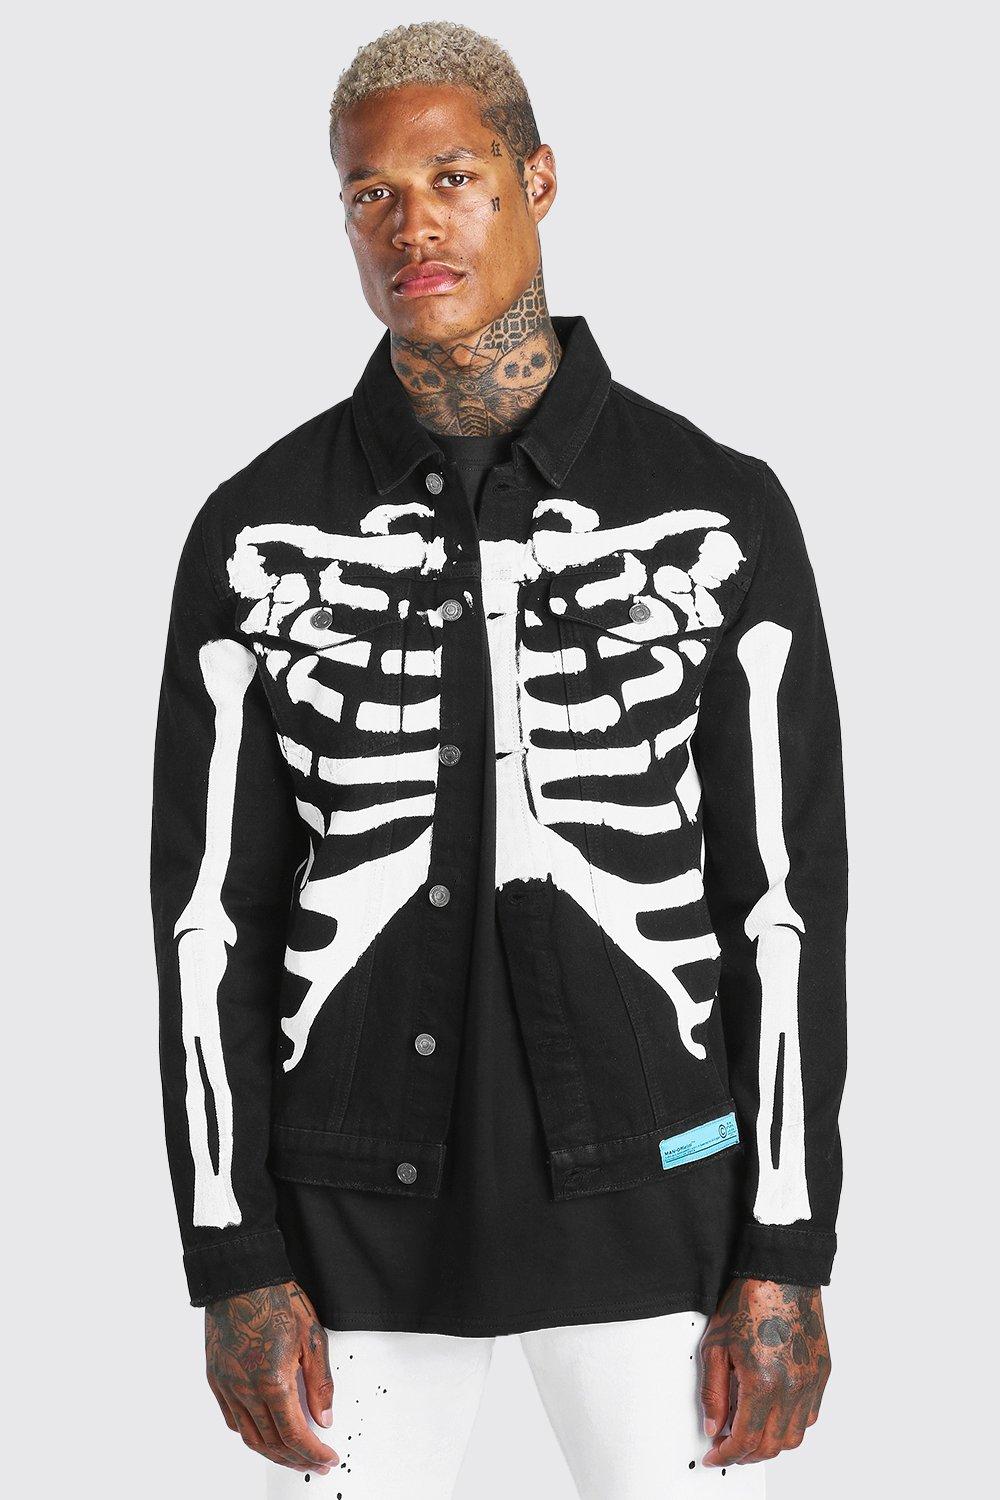 boohooMAN Men's Official Man Back Skeleton Varsity Jacket